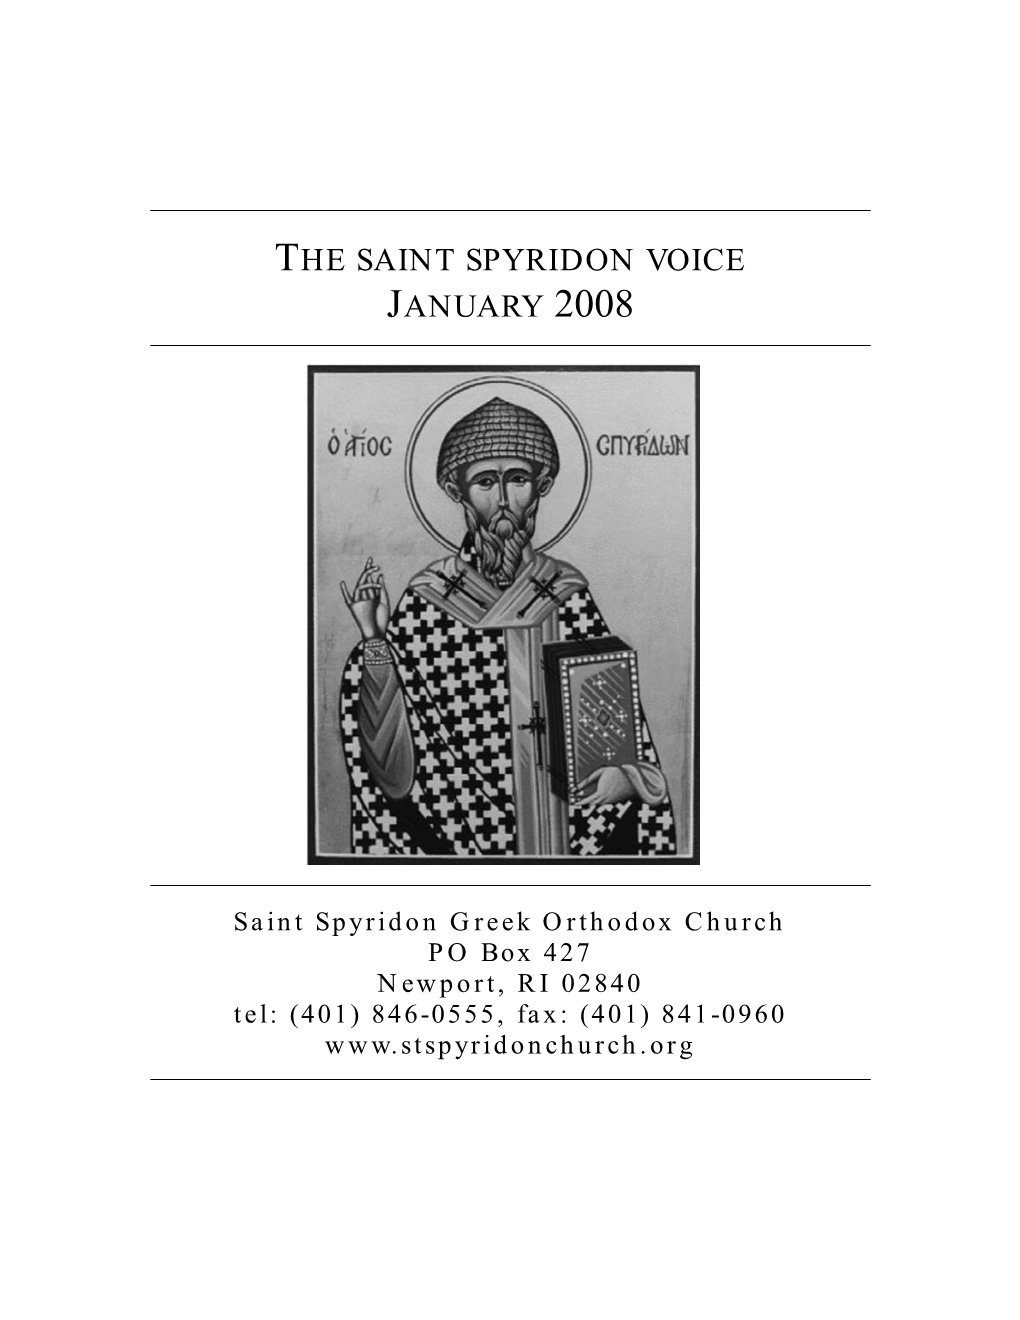 The Saint Spyridon Voice January 2008